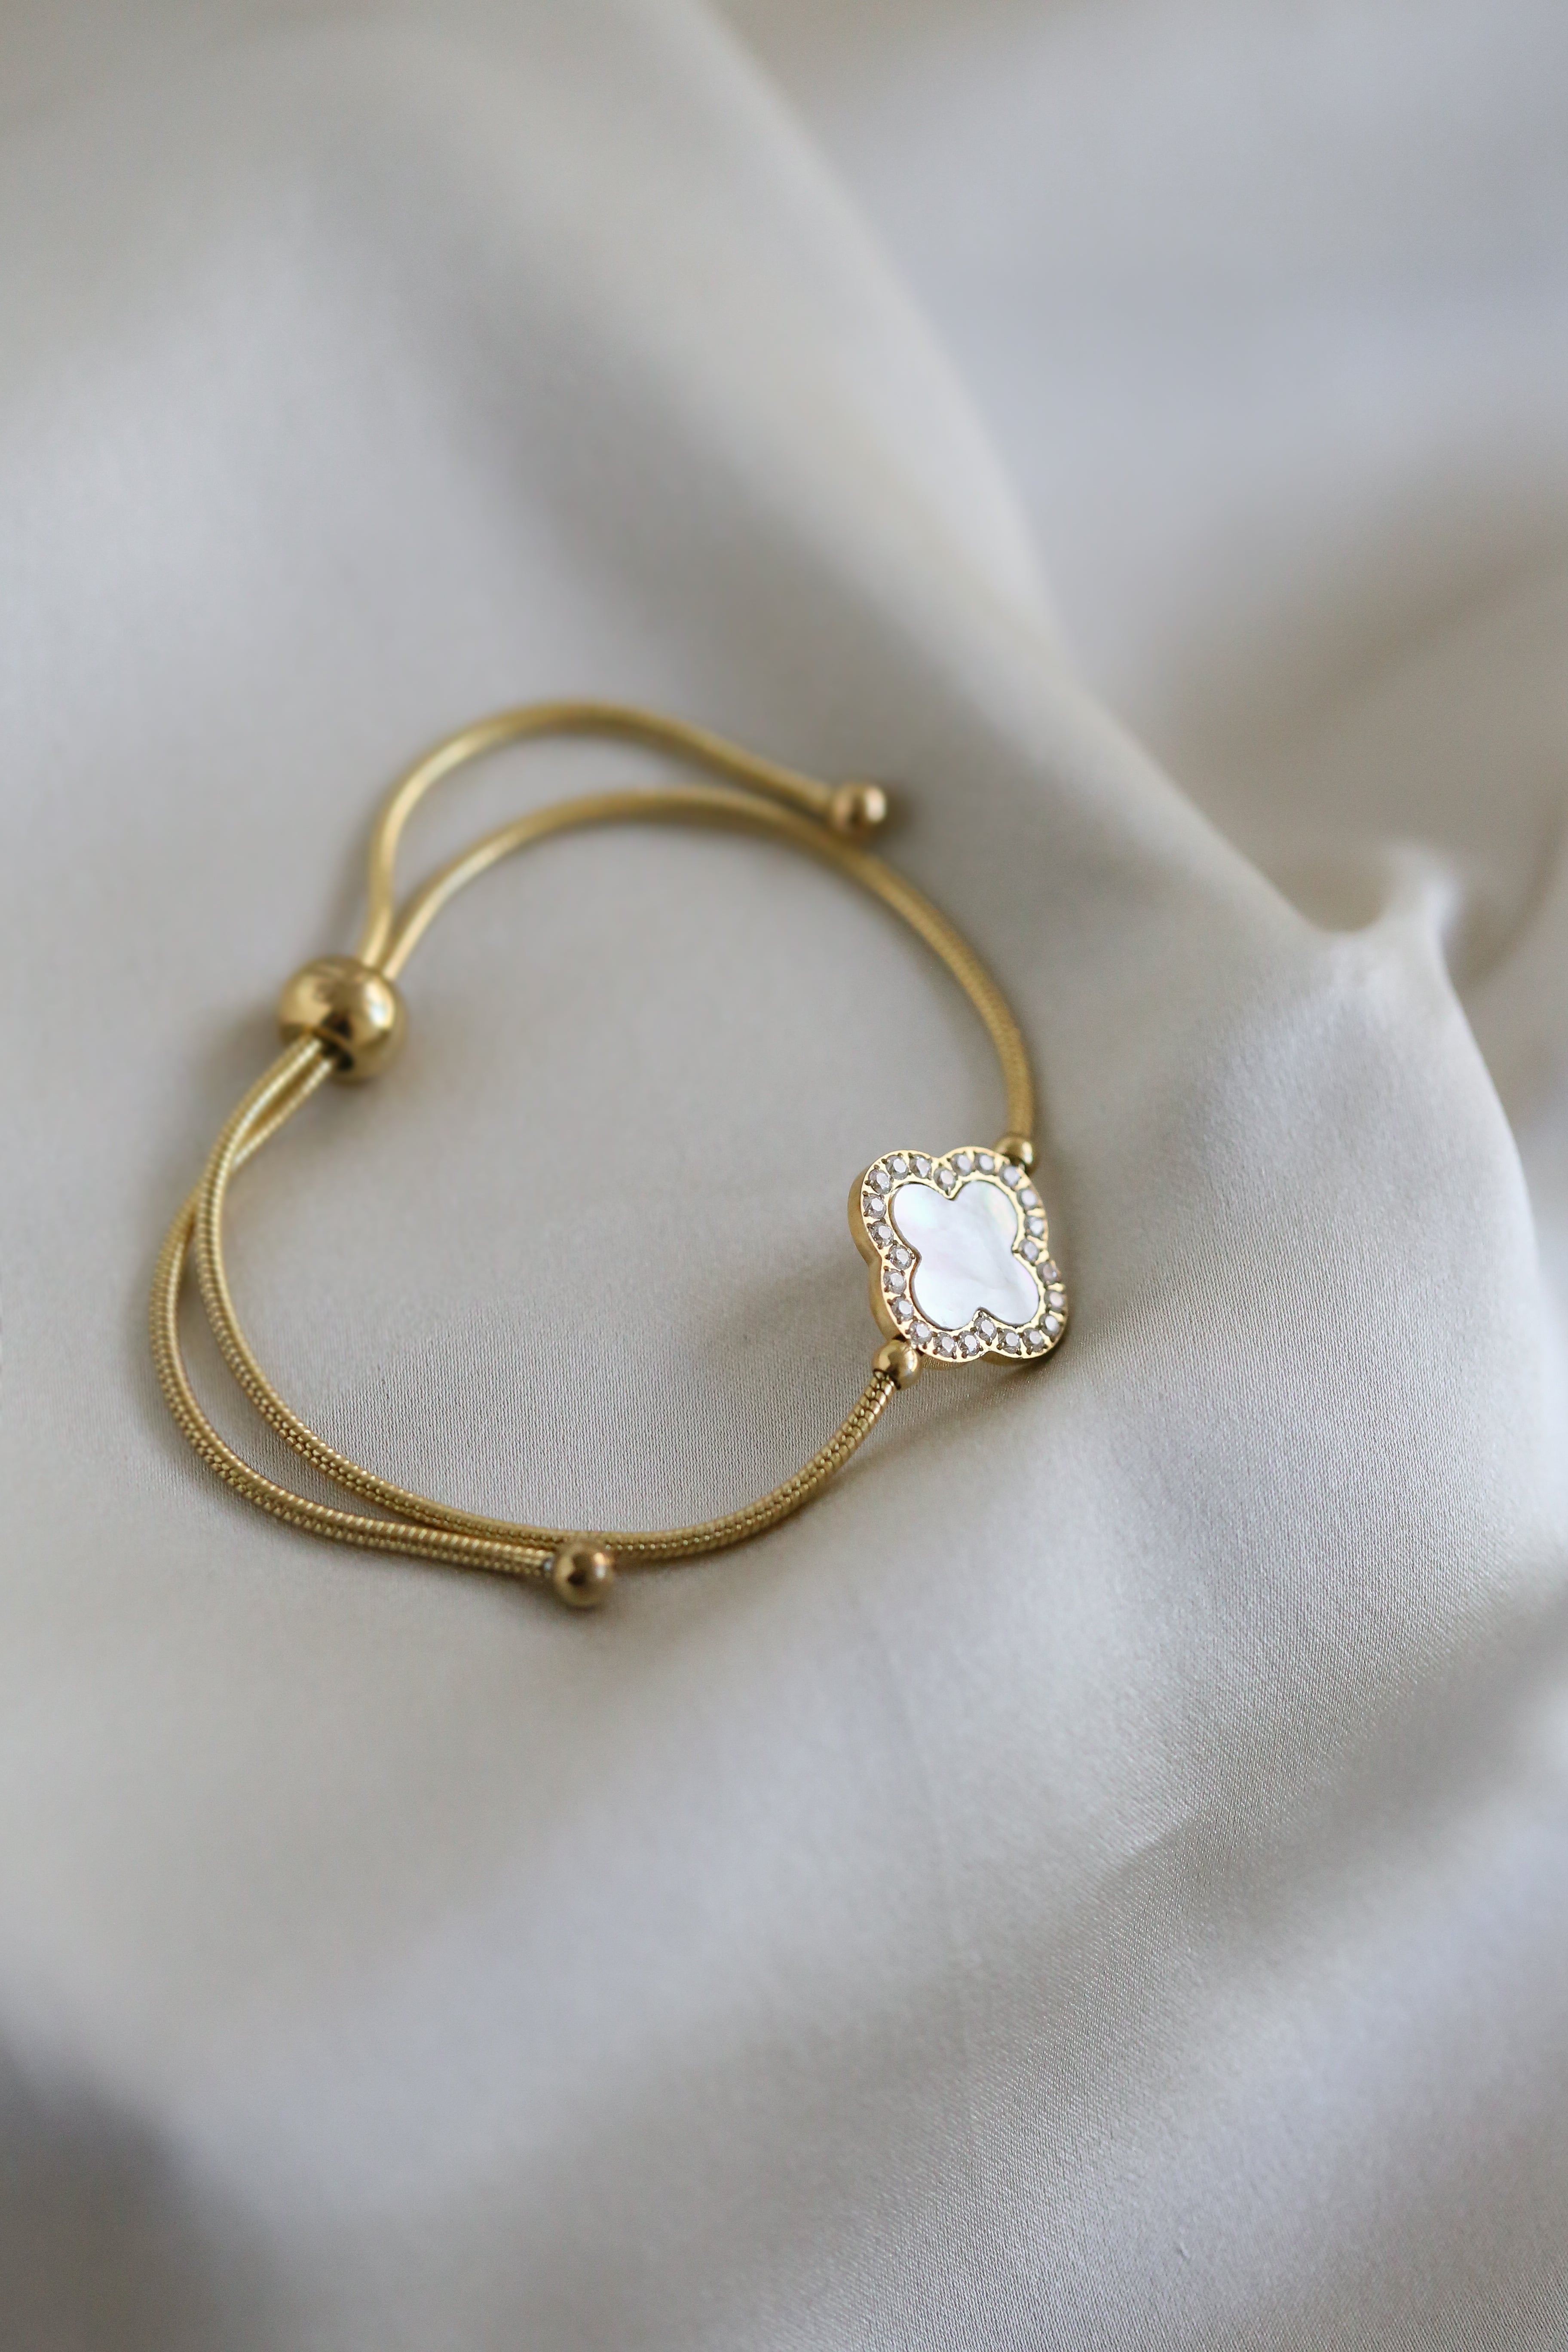 Mila Bracelet - Boutique Minimaliste has waterproof, durable, elegant and vintage inspired jewelry